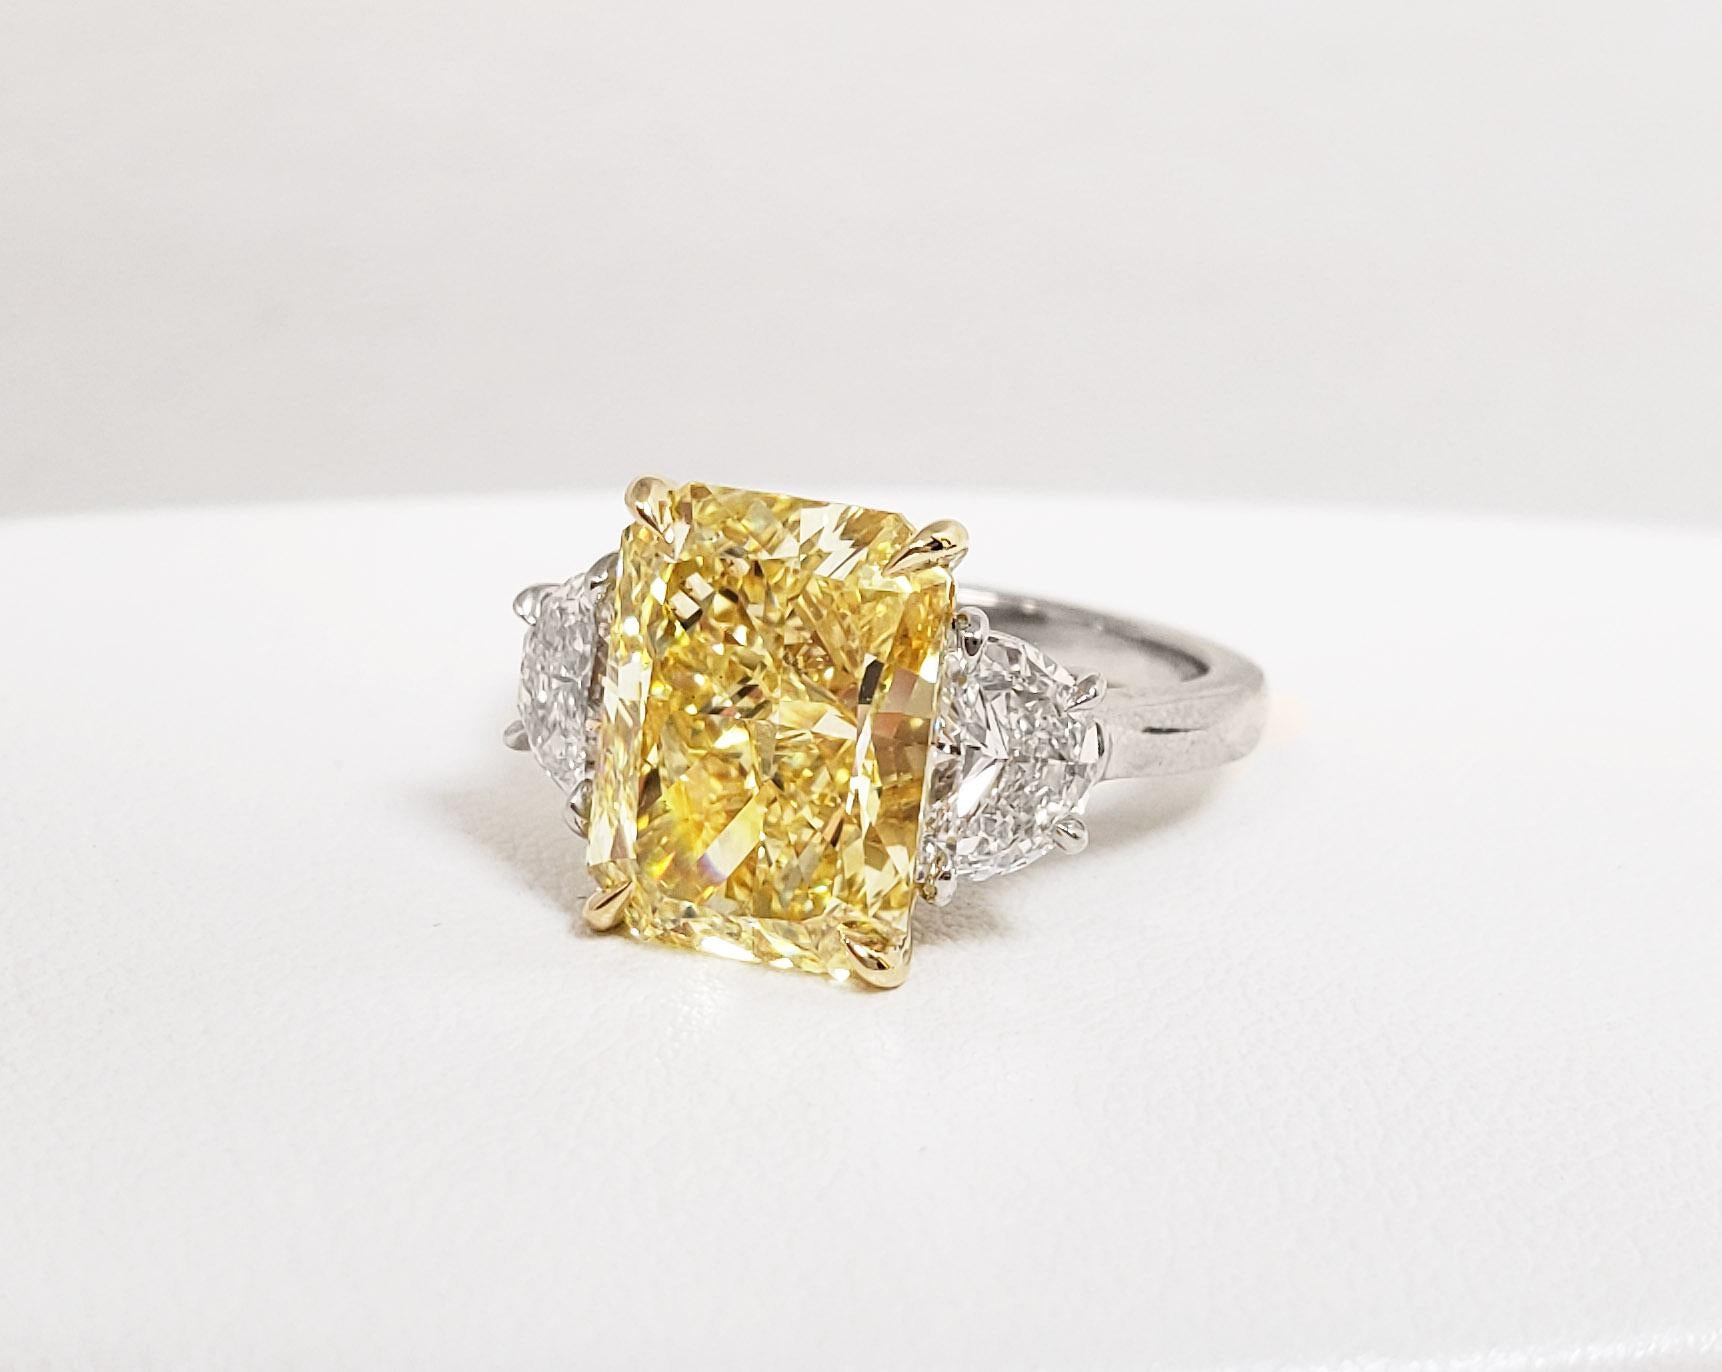 5 carat fancy yellow diamond price